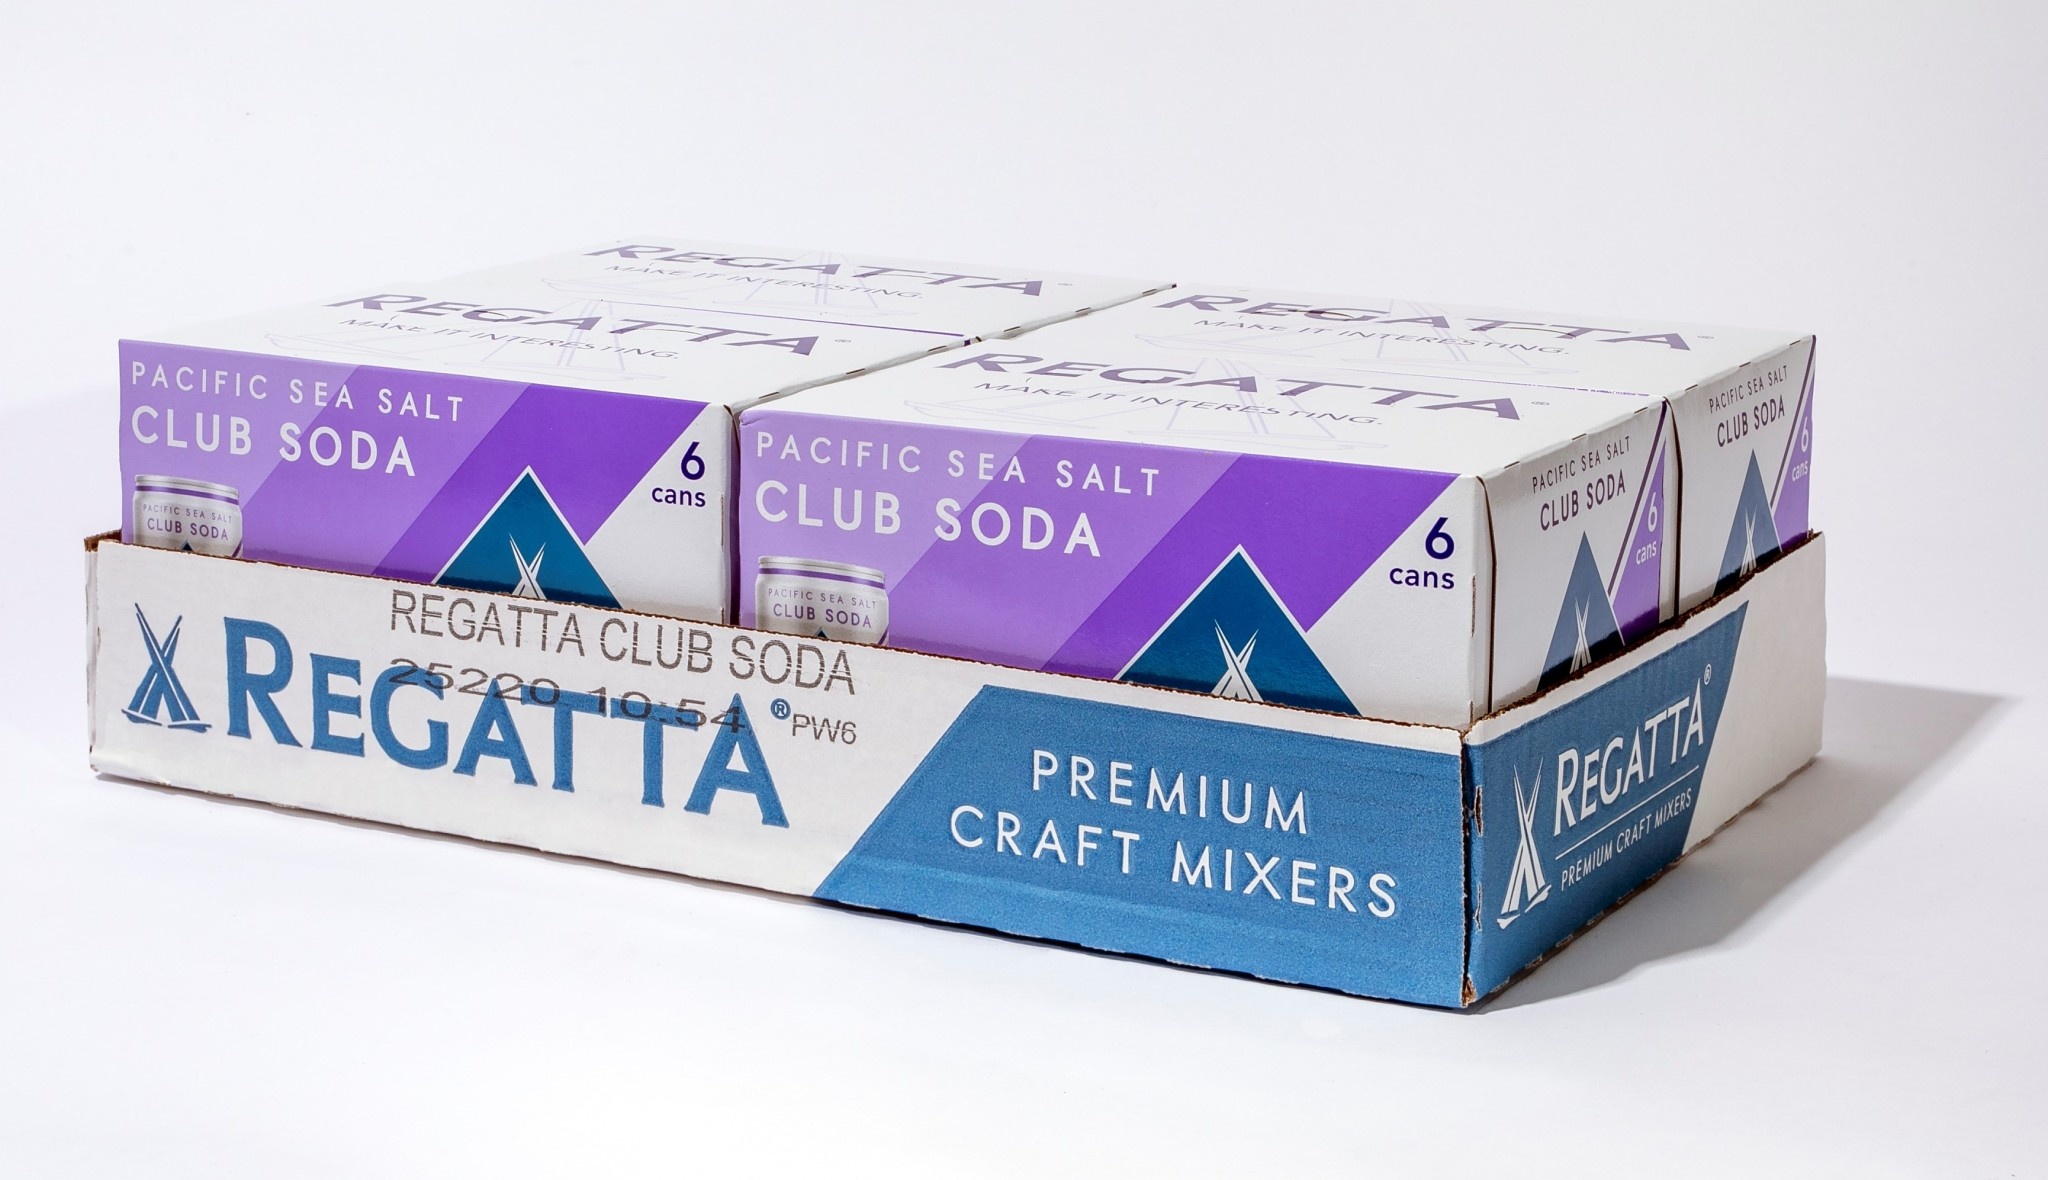 Regatta Pacific Sea Salt Club Soda Case Slim Cans 4/6pk - 7oz